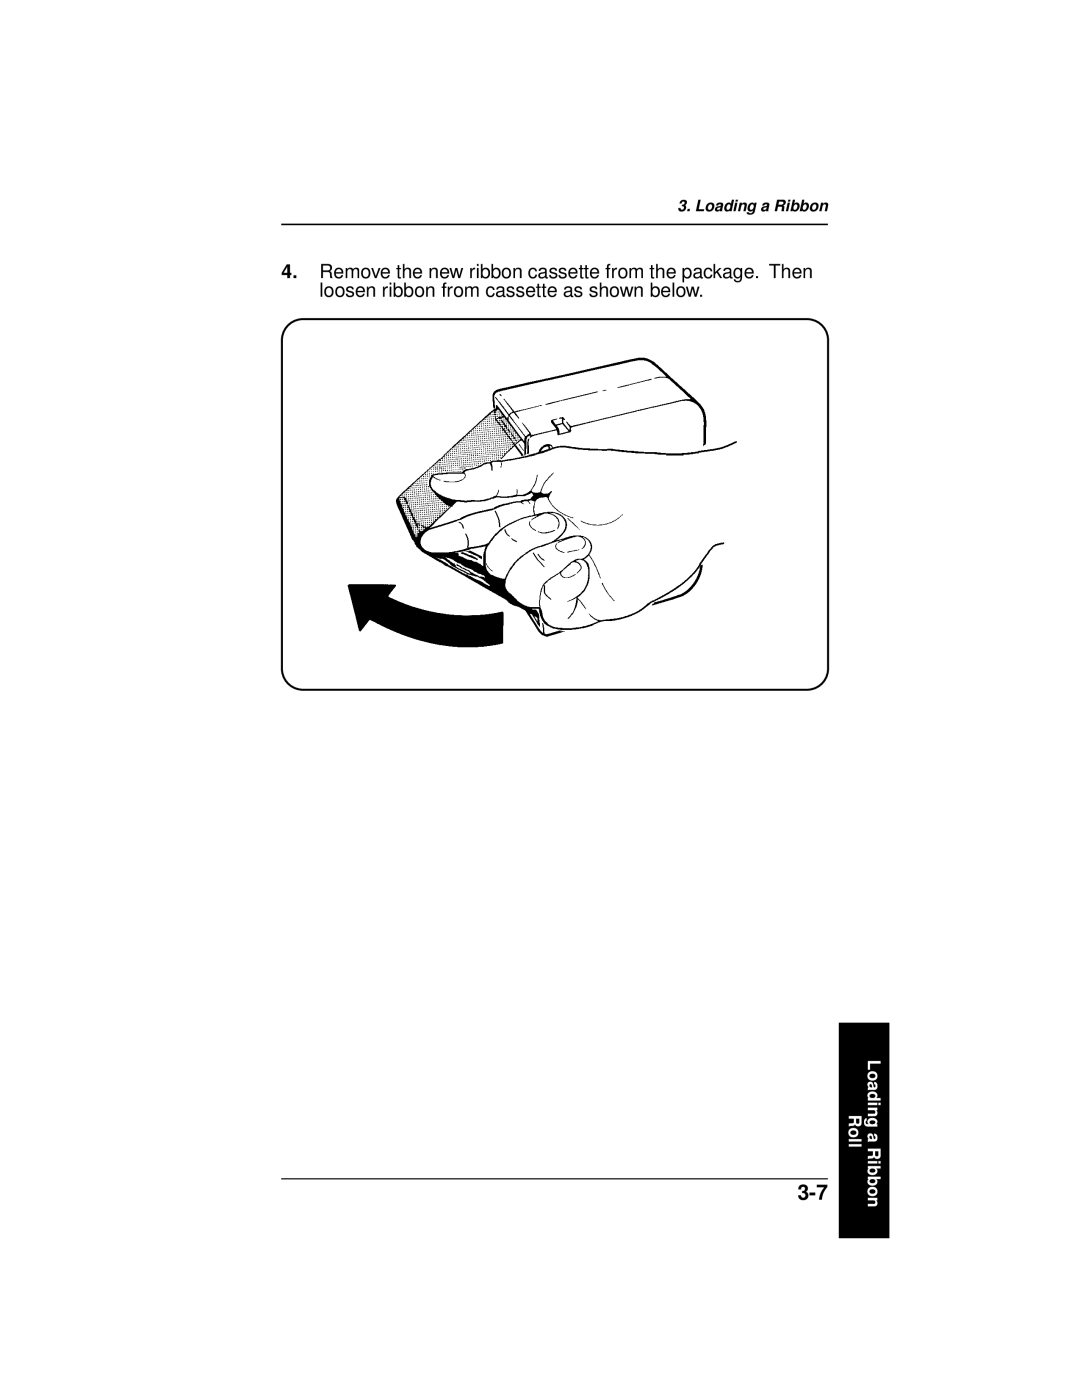 Paxar 9445 manual Loading a Ribbon Roll 